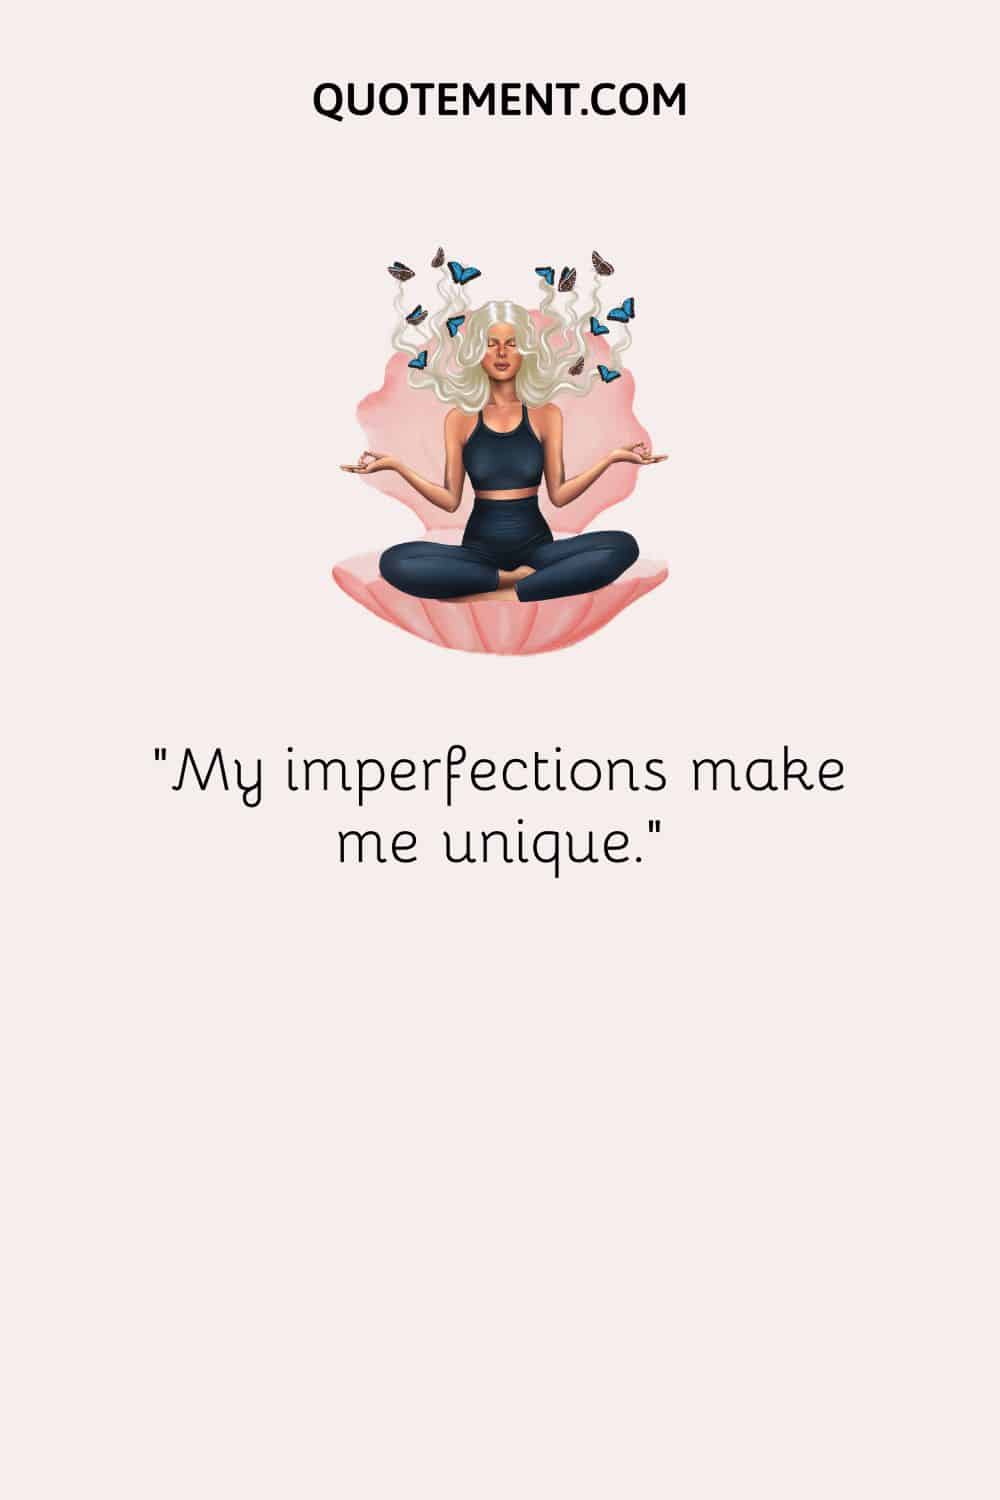 My imperfections make me unique